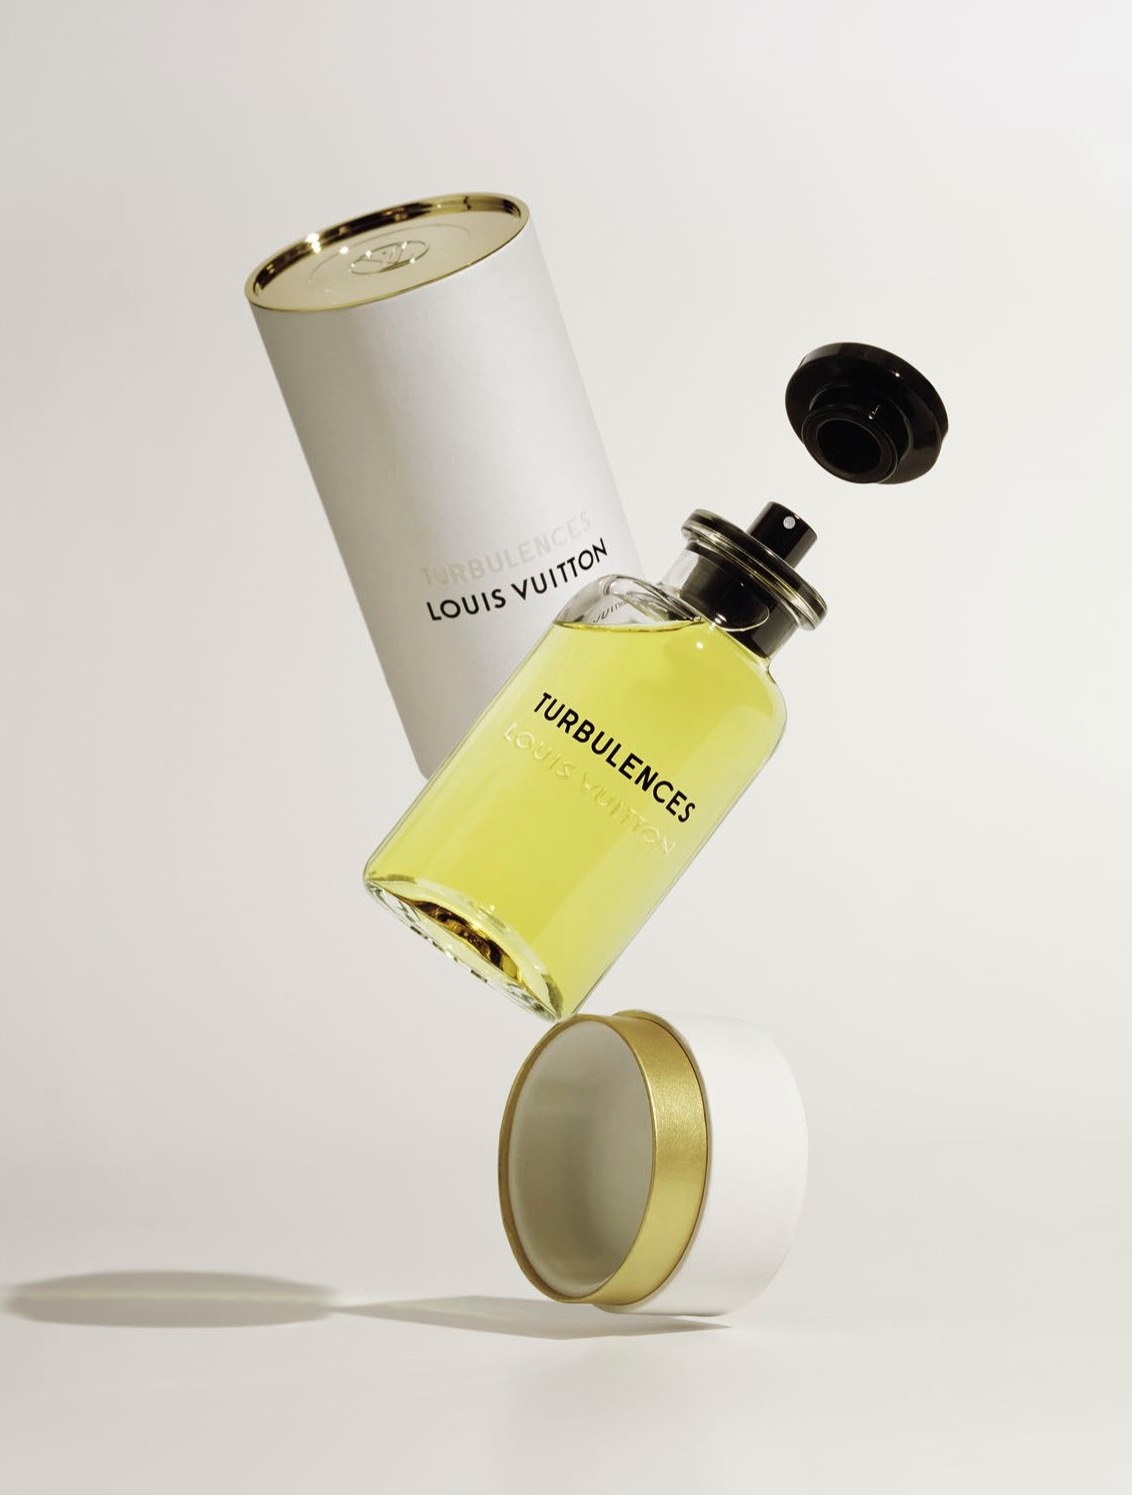 Louis Vuitton returns to the world of perfumes - Associació de Passeig de  Gràcia